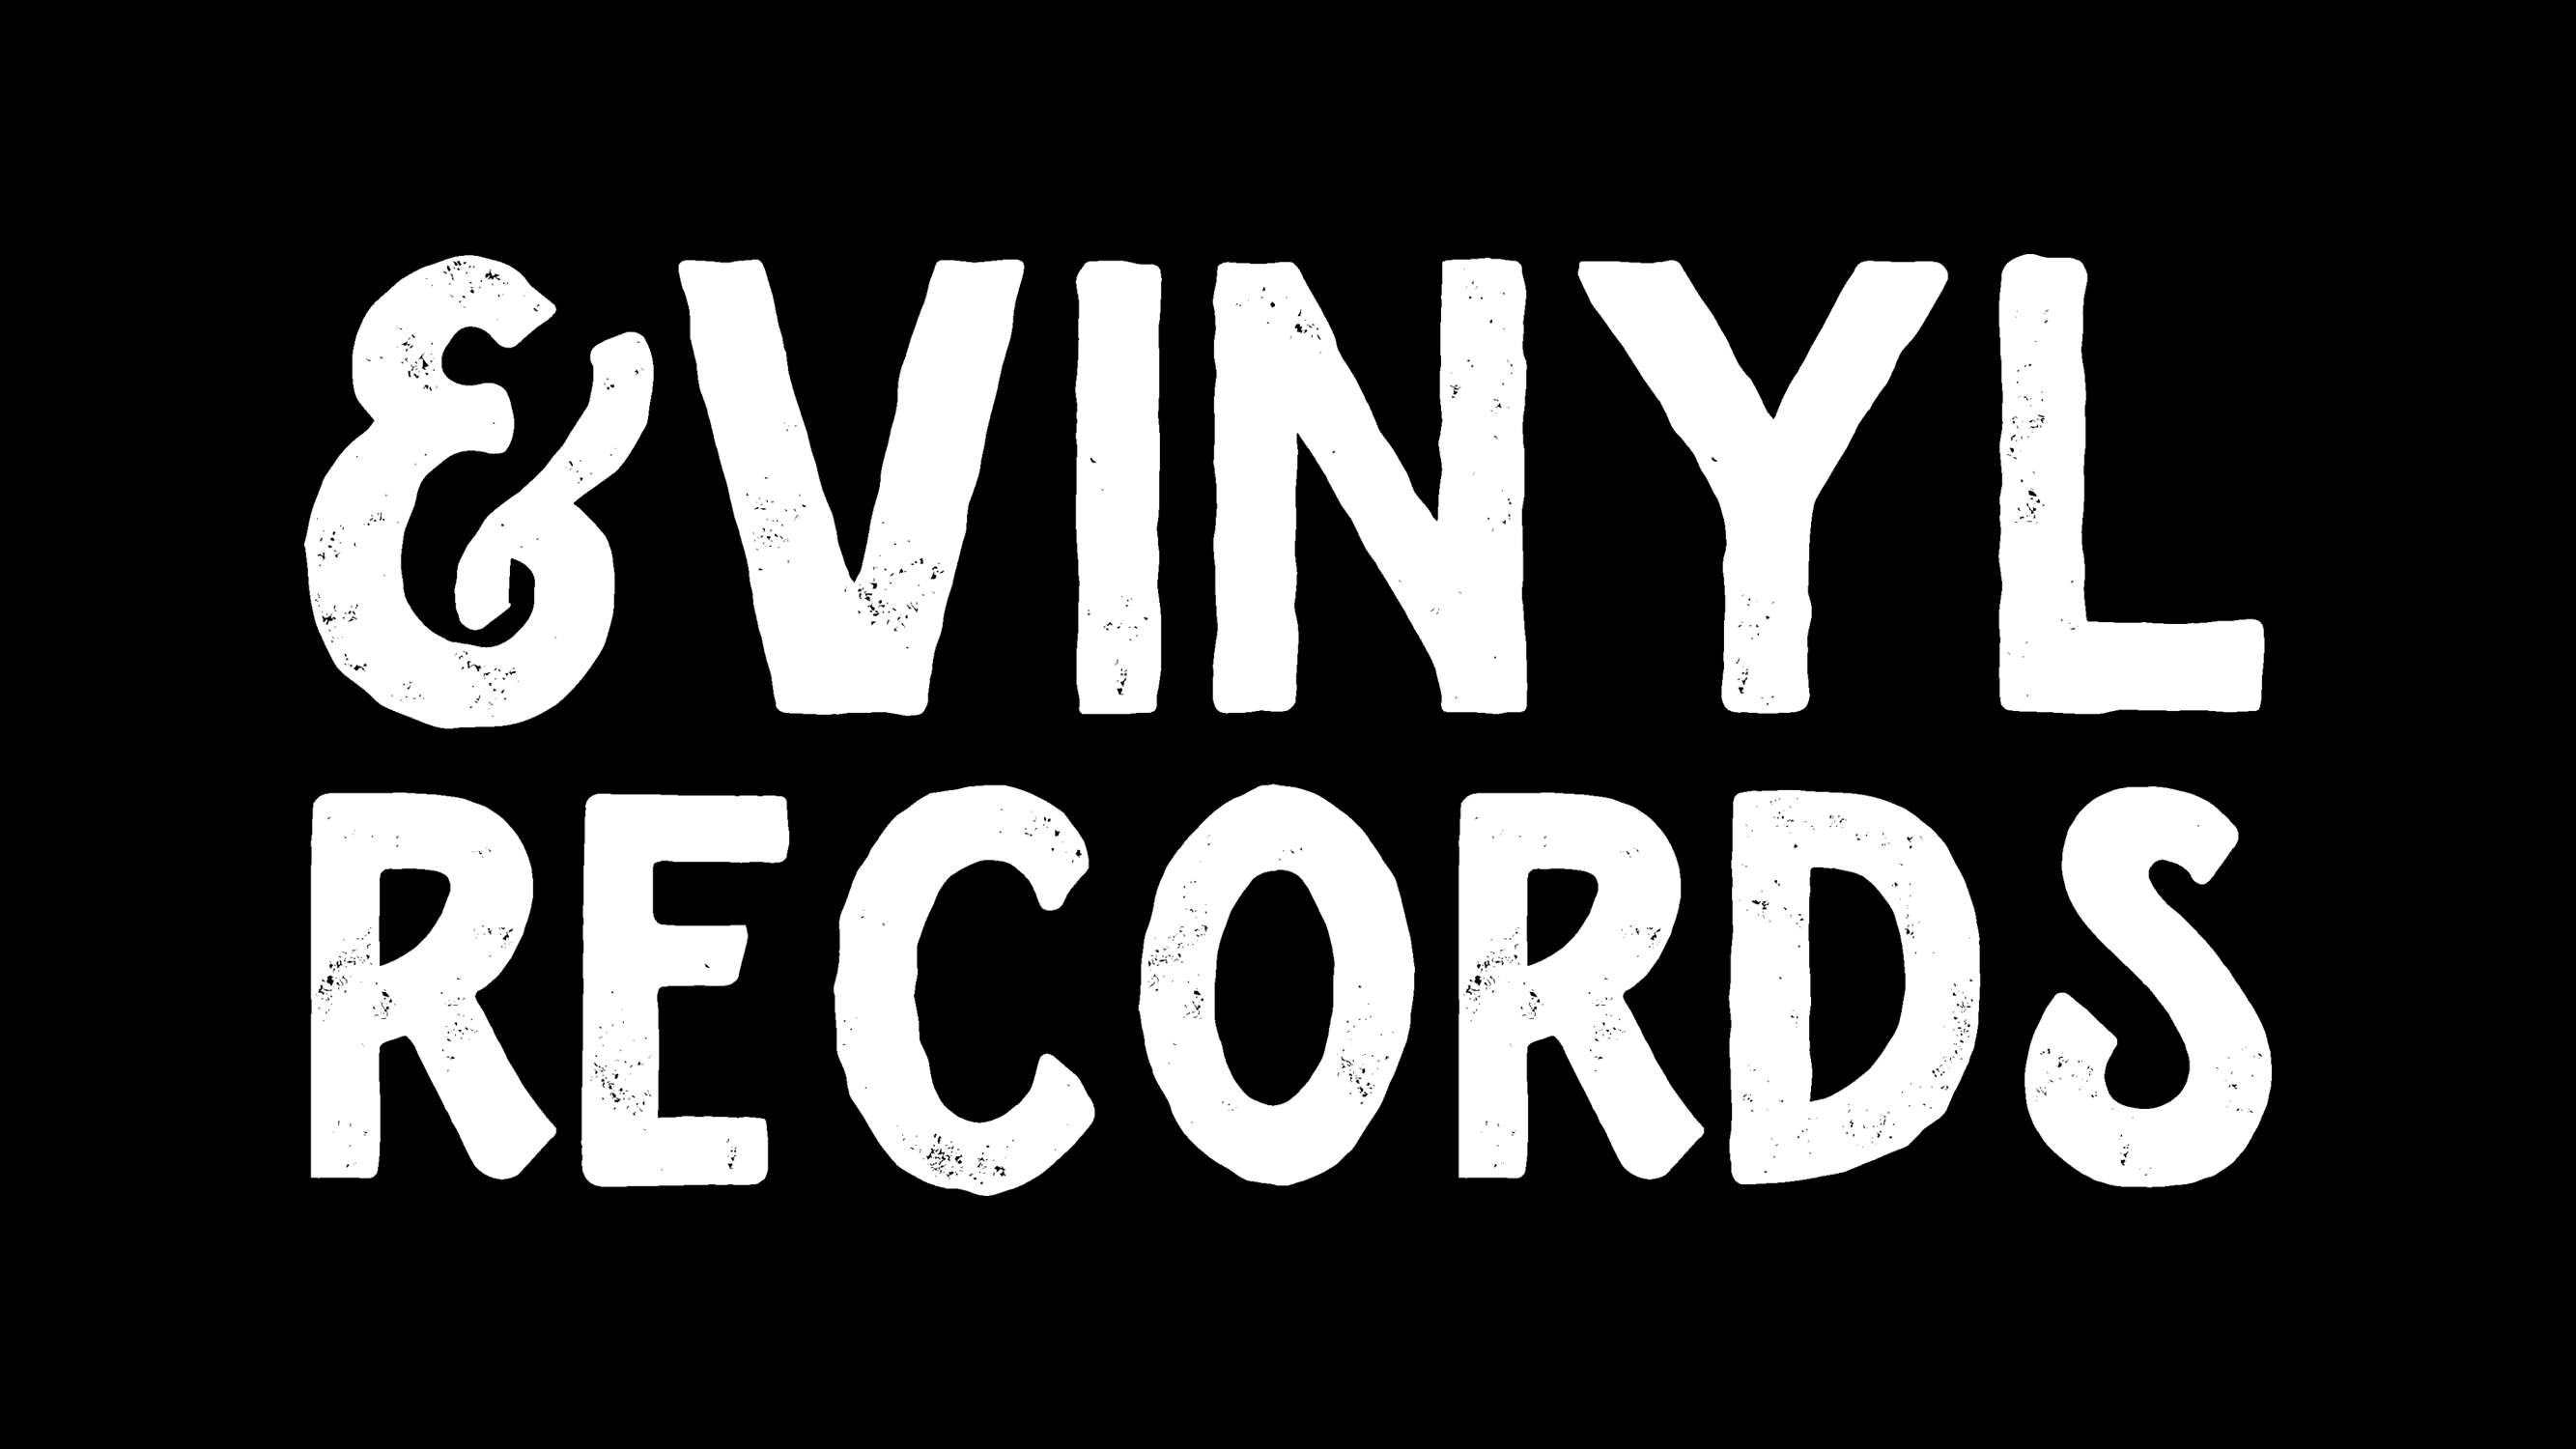 AndVinyl Records